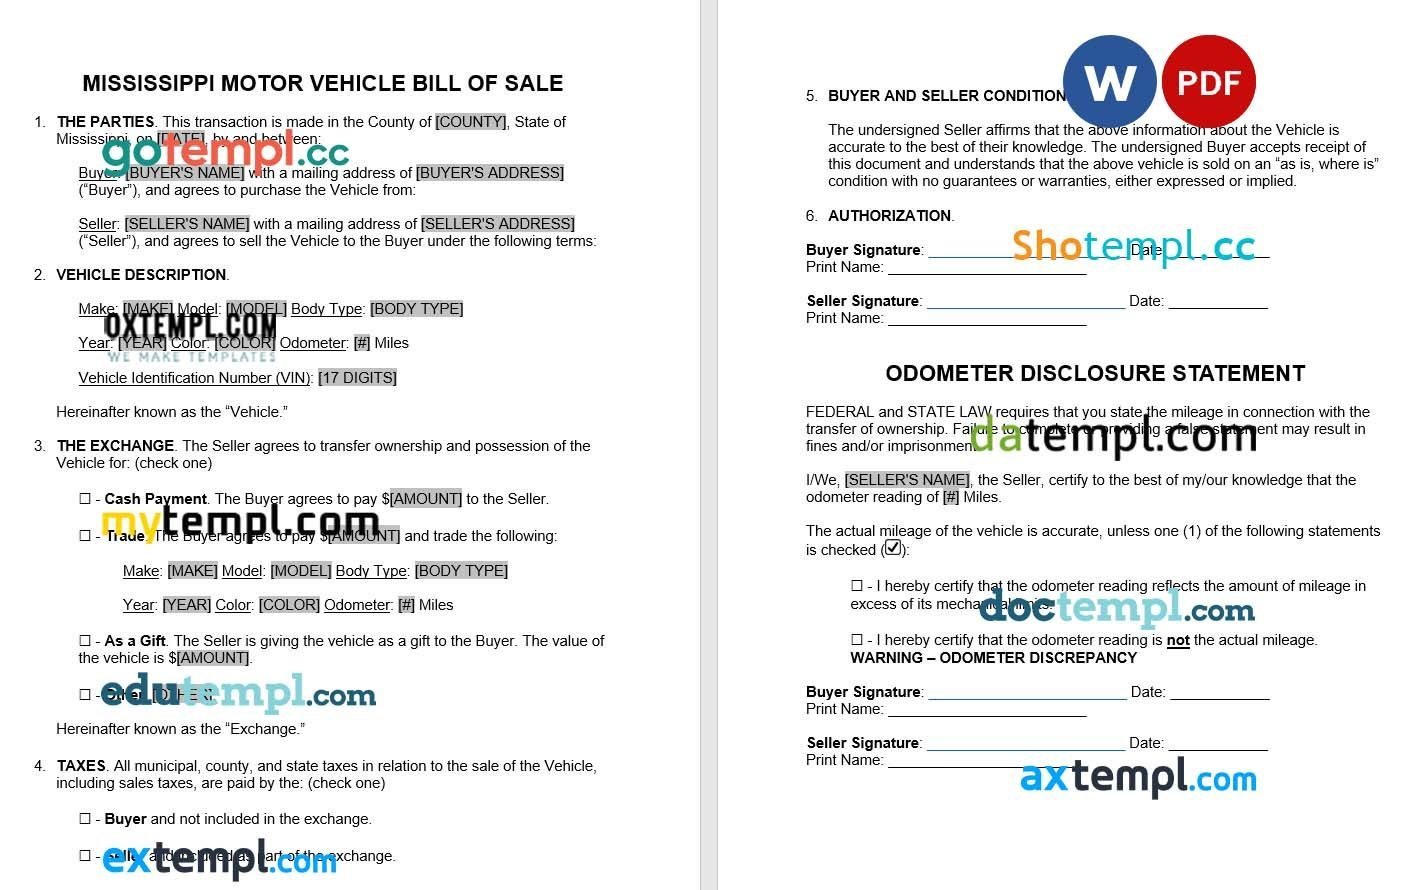 Mississippi Motor Vehicle Bill of Sale example, fully editabl